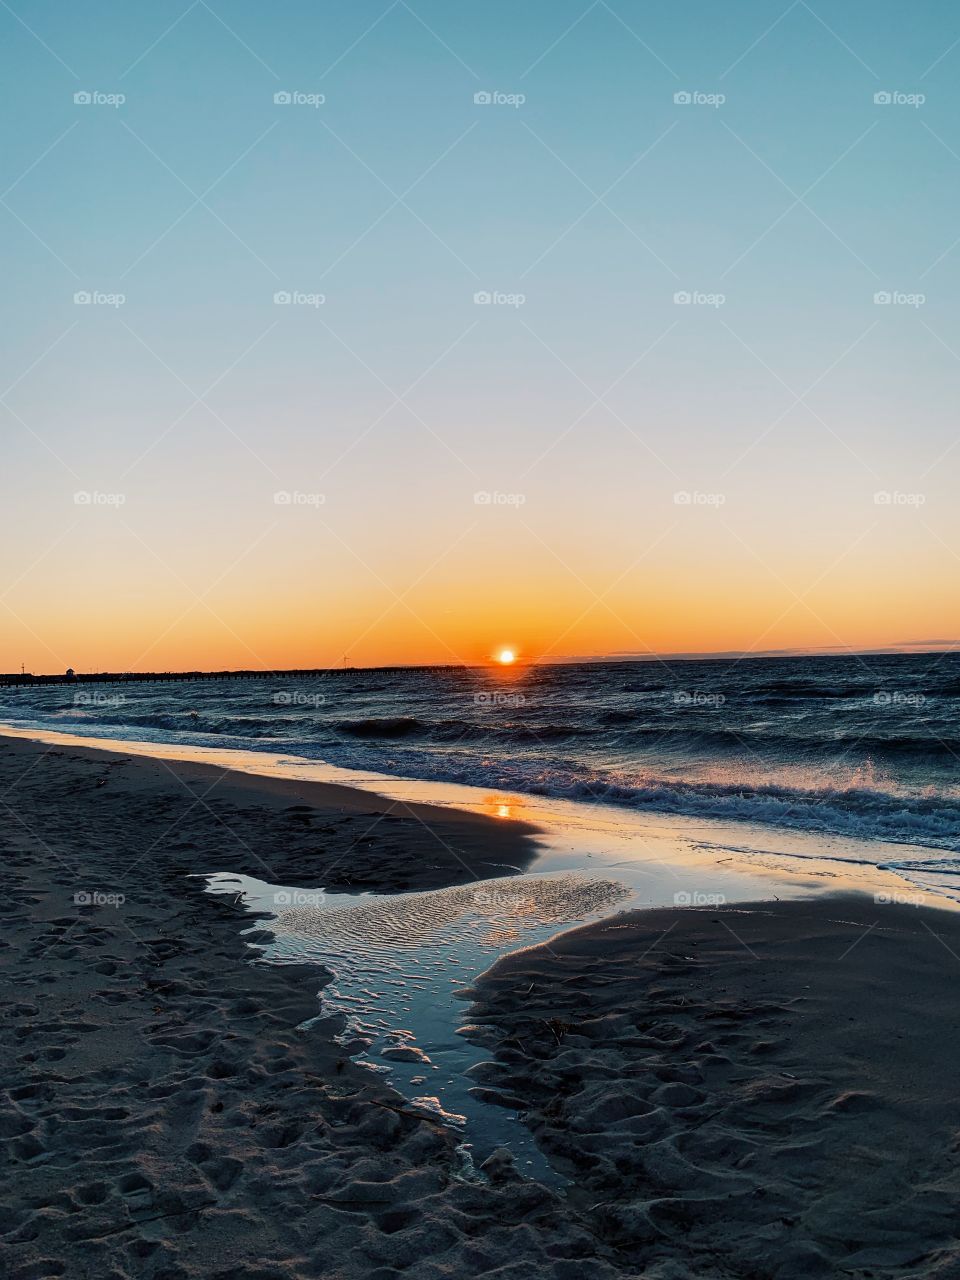 Beach sunsets 